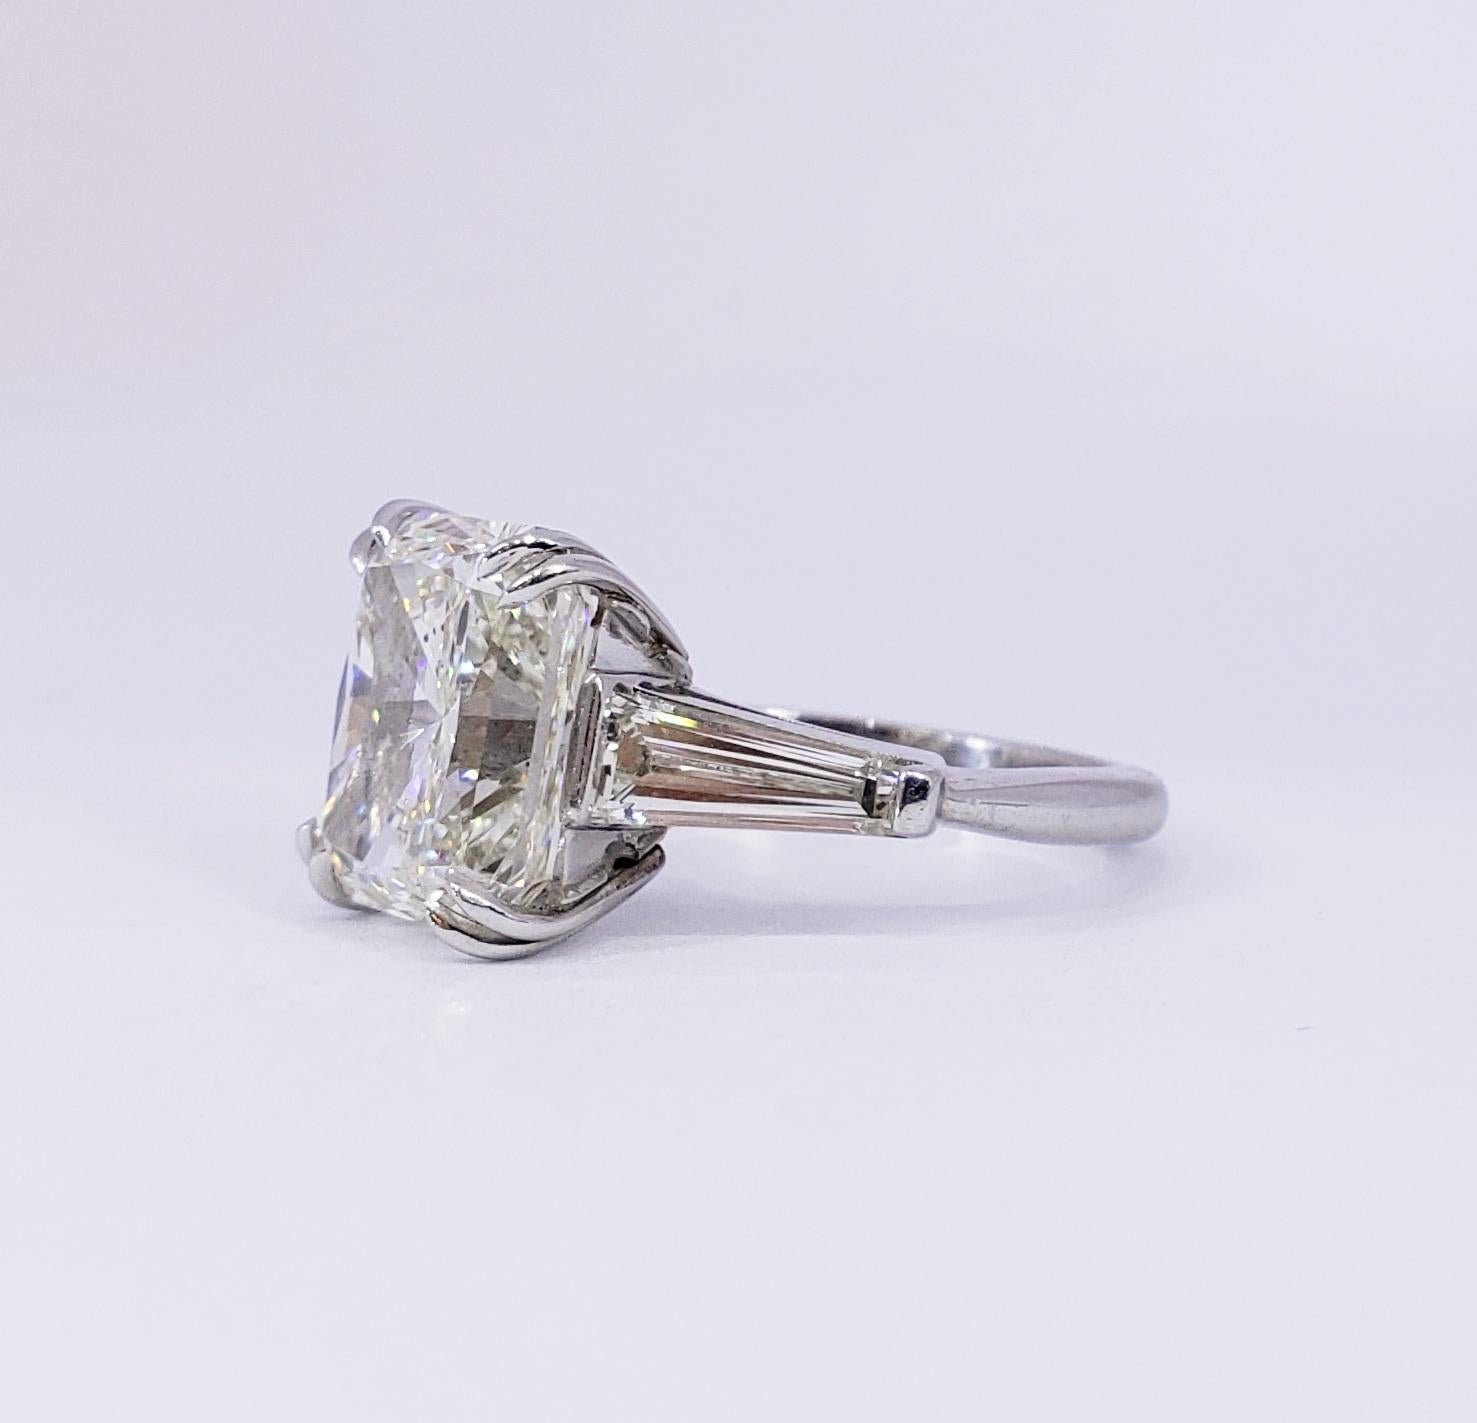 6 carat radiant cut diamond ring price